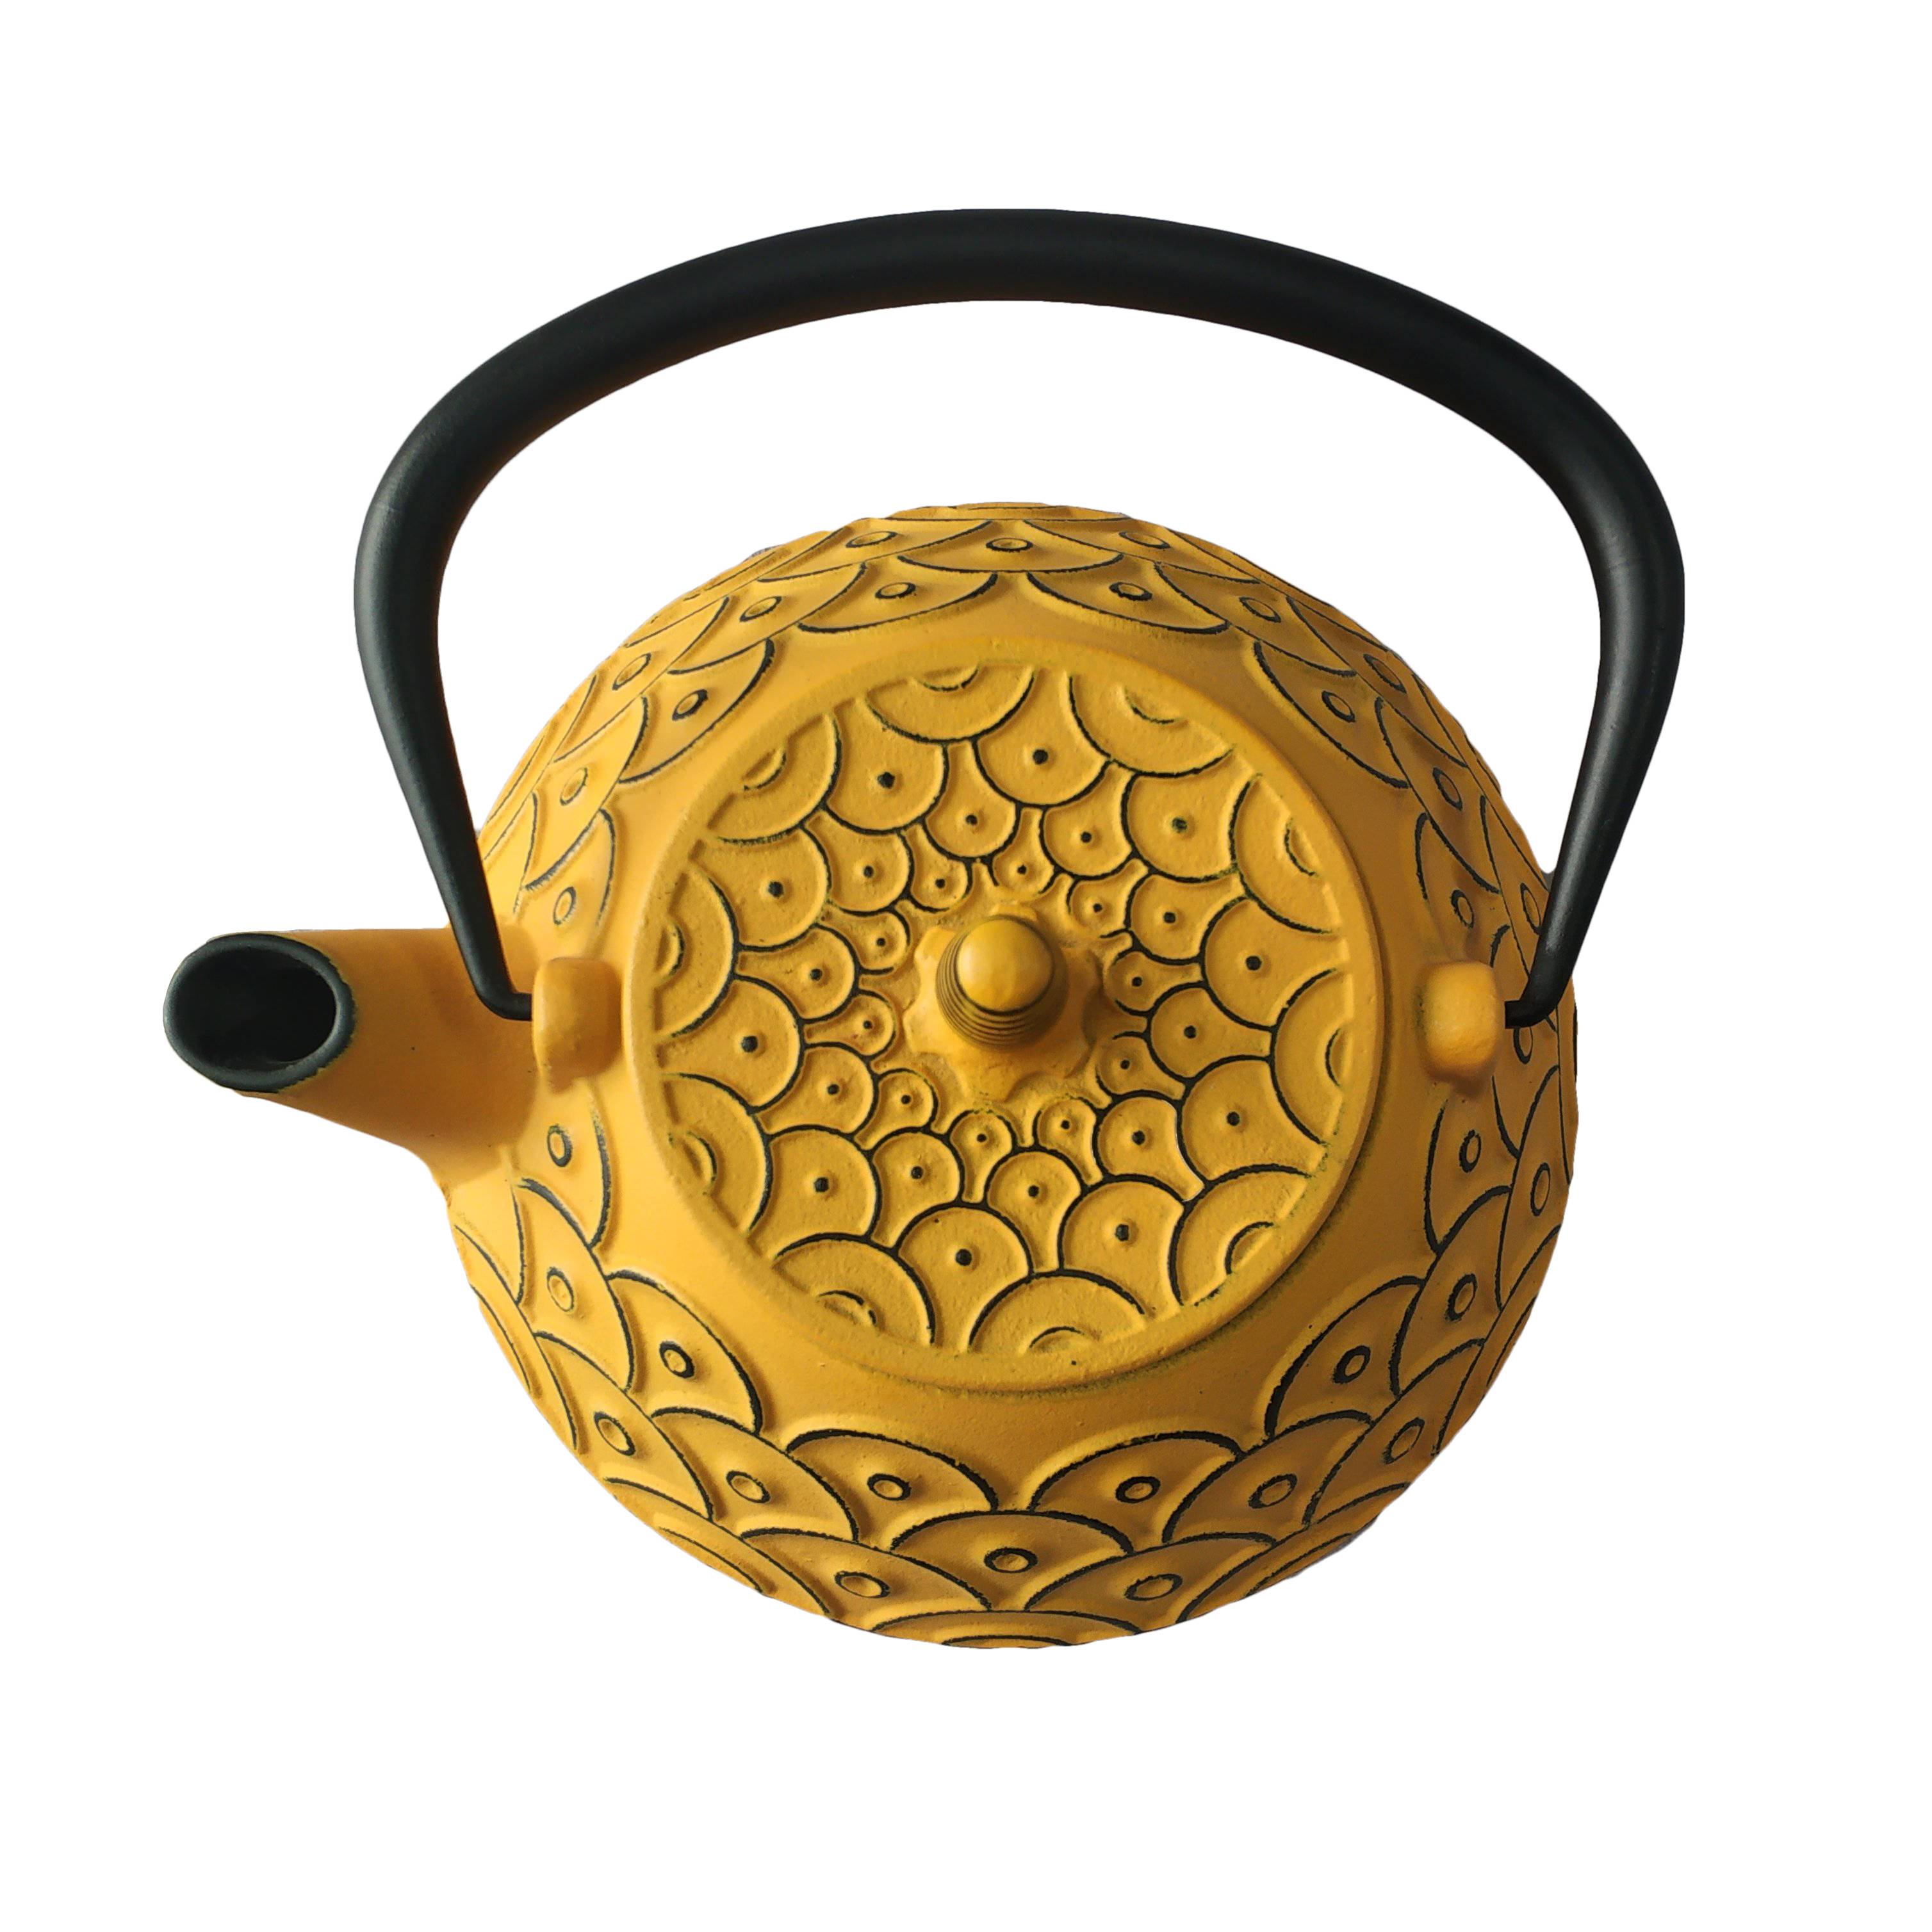 0.8L best wholesale Eurofins approved yellow color enamel tetsubin cast iron kettle teapot with S/S Infuser